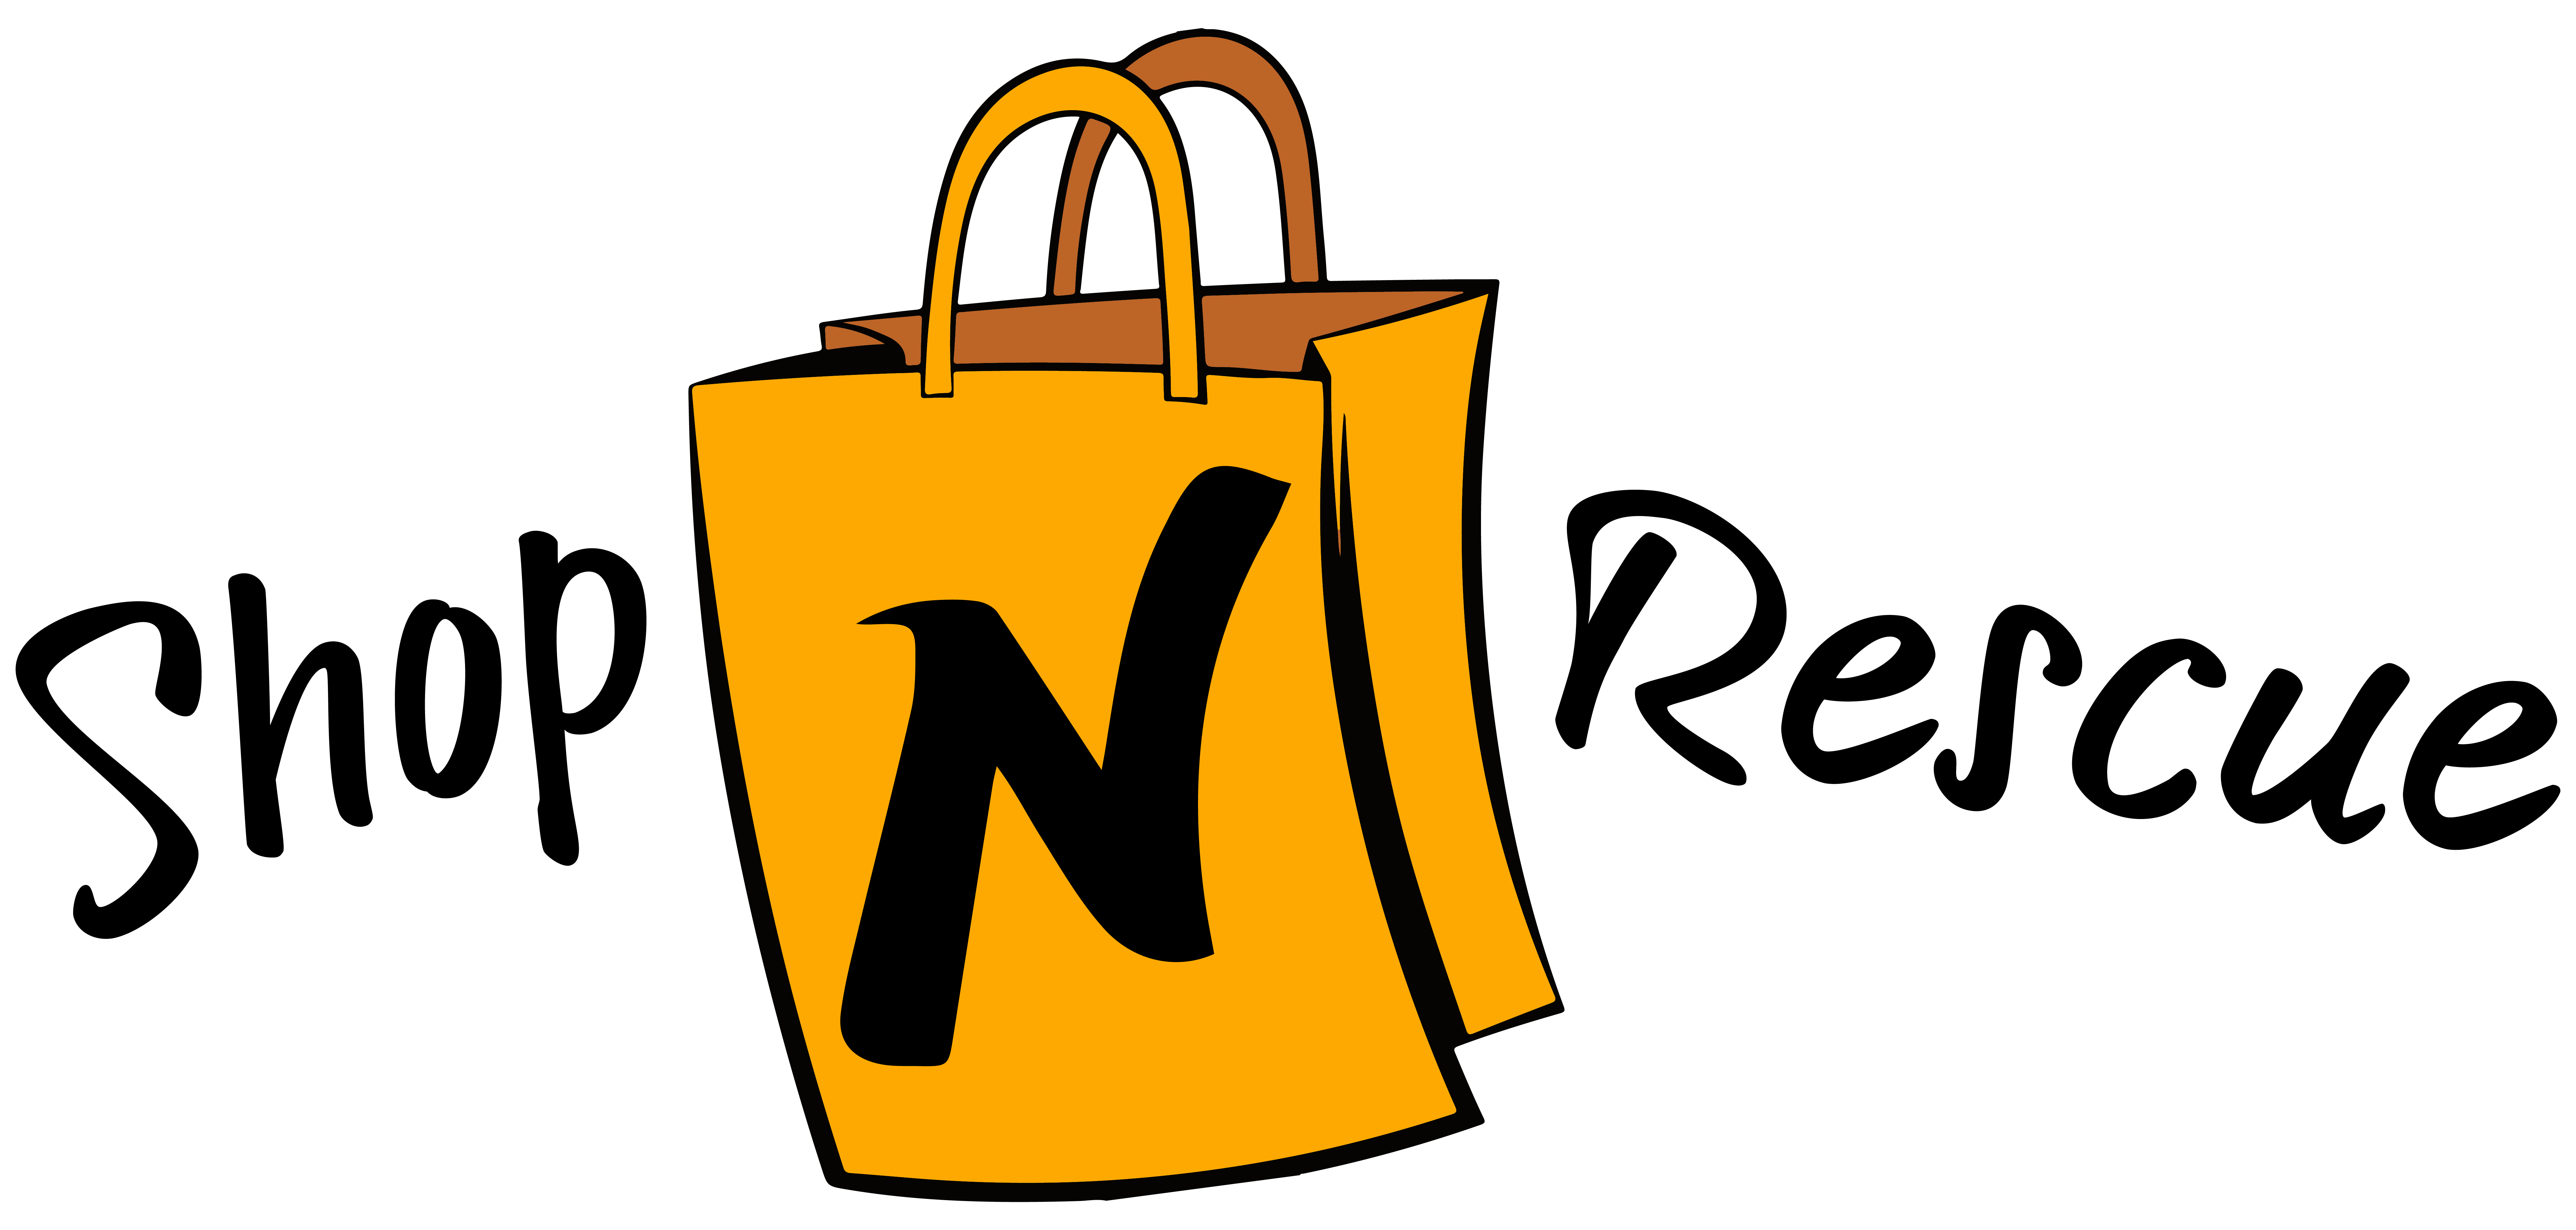 shopnrescue logo